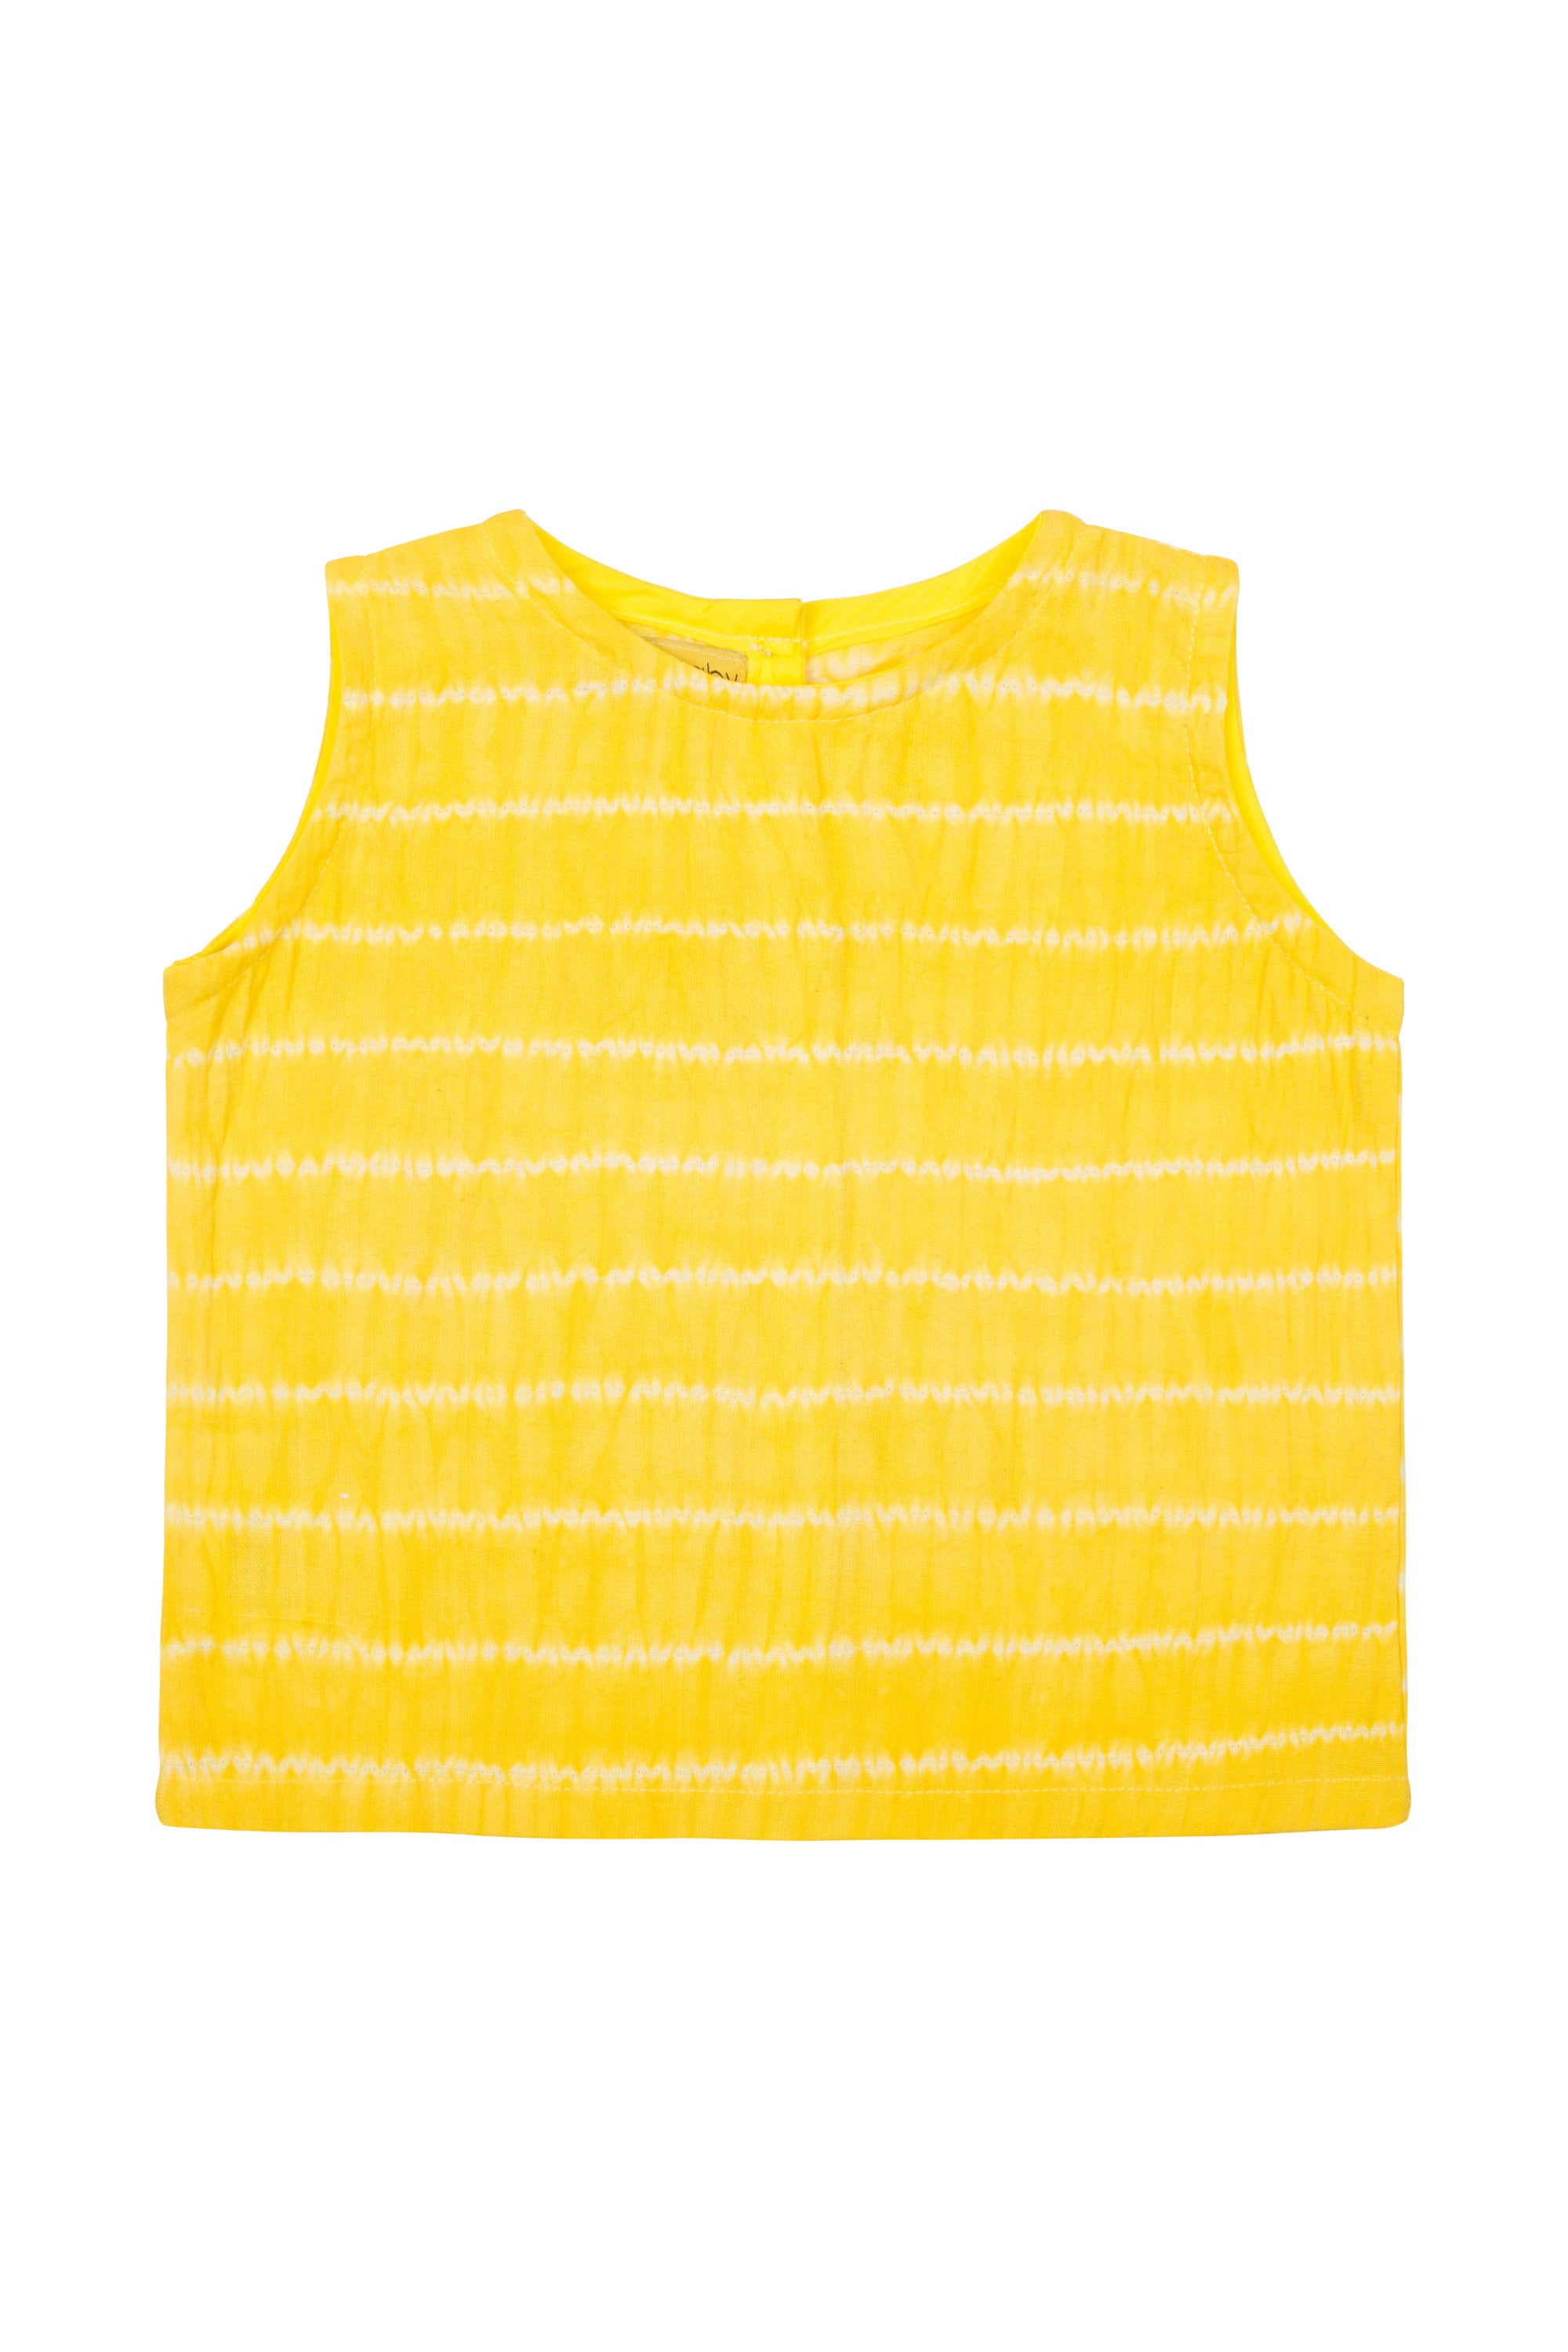 yellow cotton shibori vest with button back